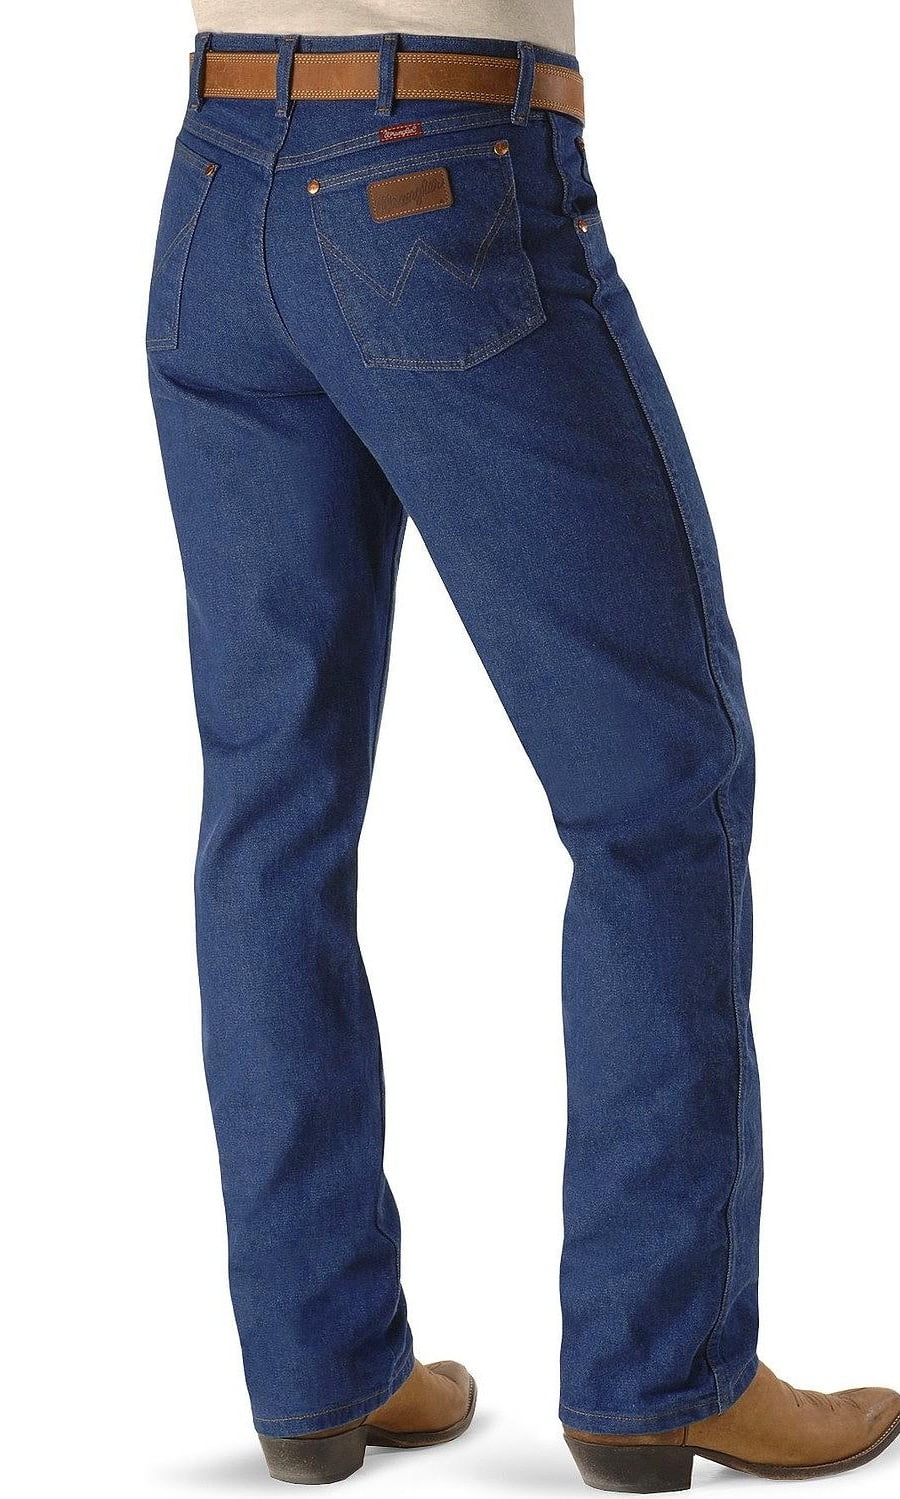 wrangler men's jeans 31mwz relaxed fit prewashed denim - 31mwzpw_x7 ...